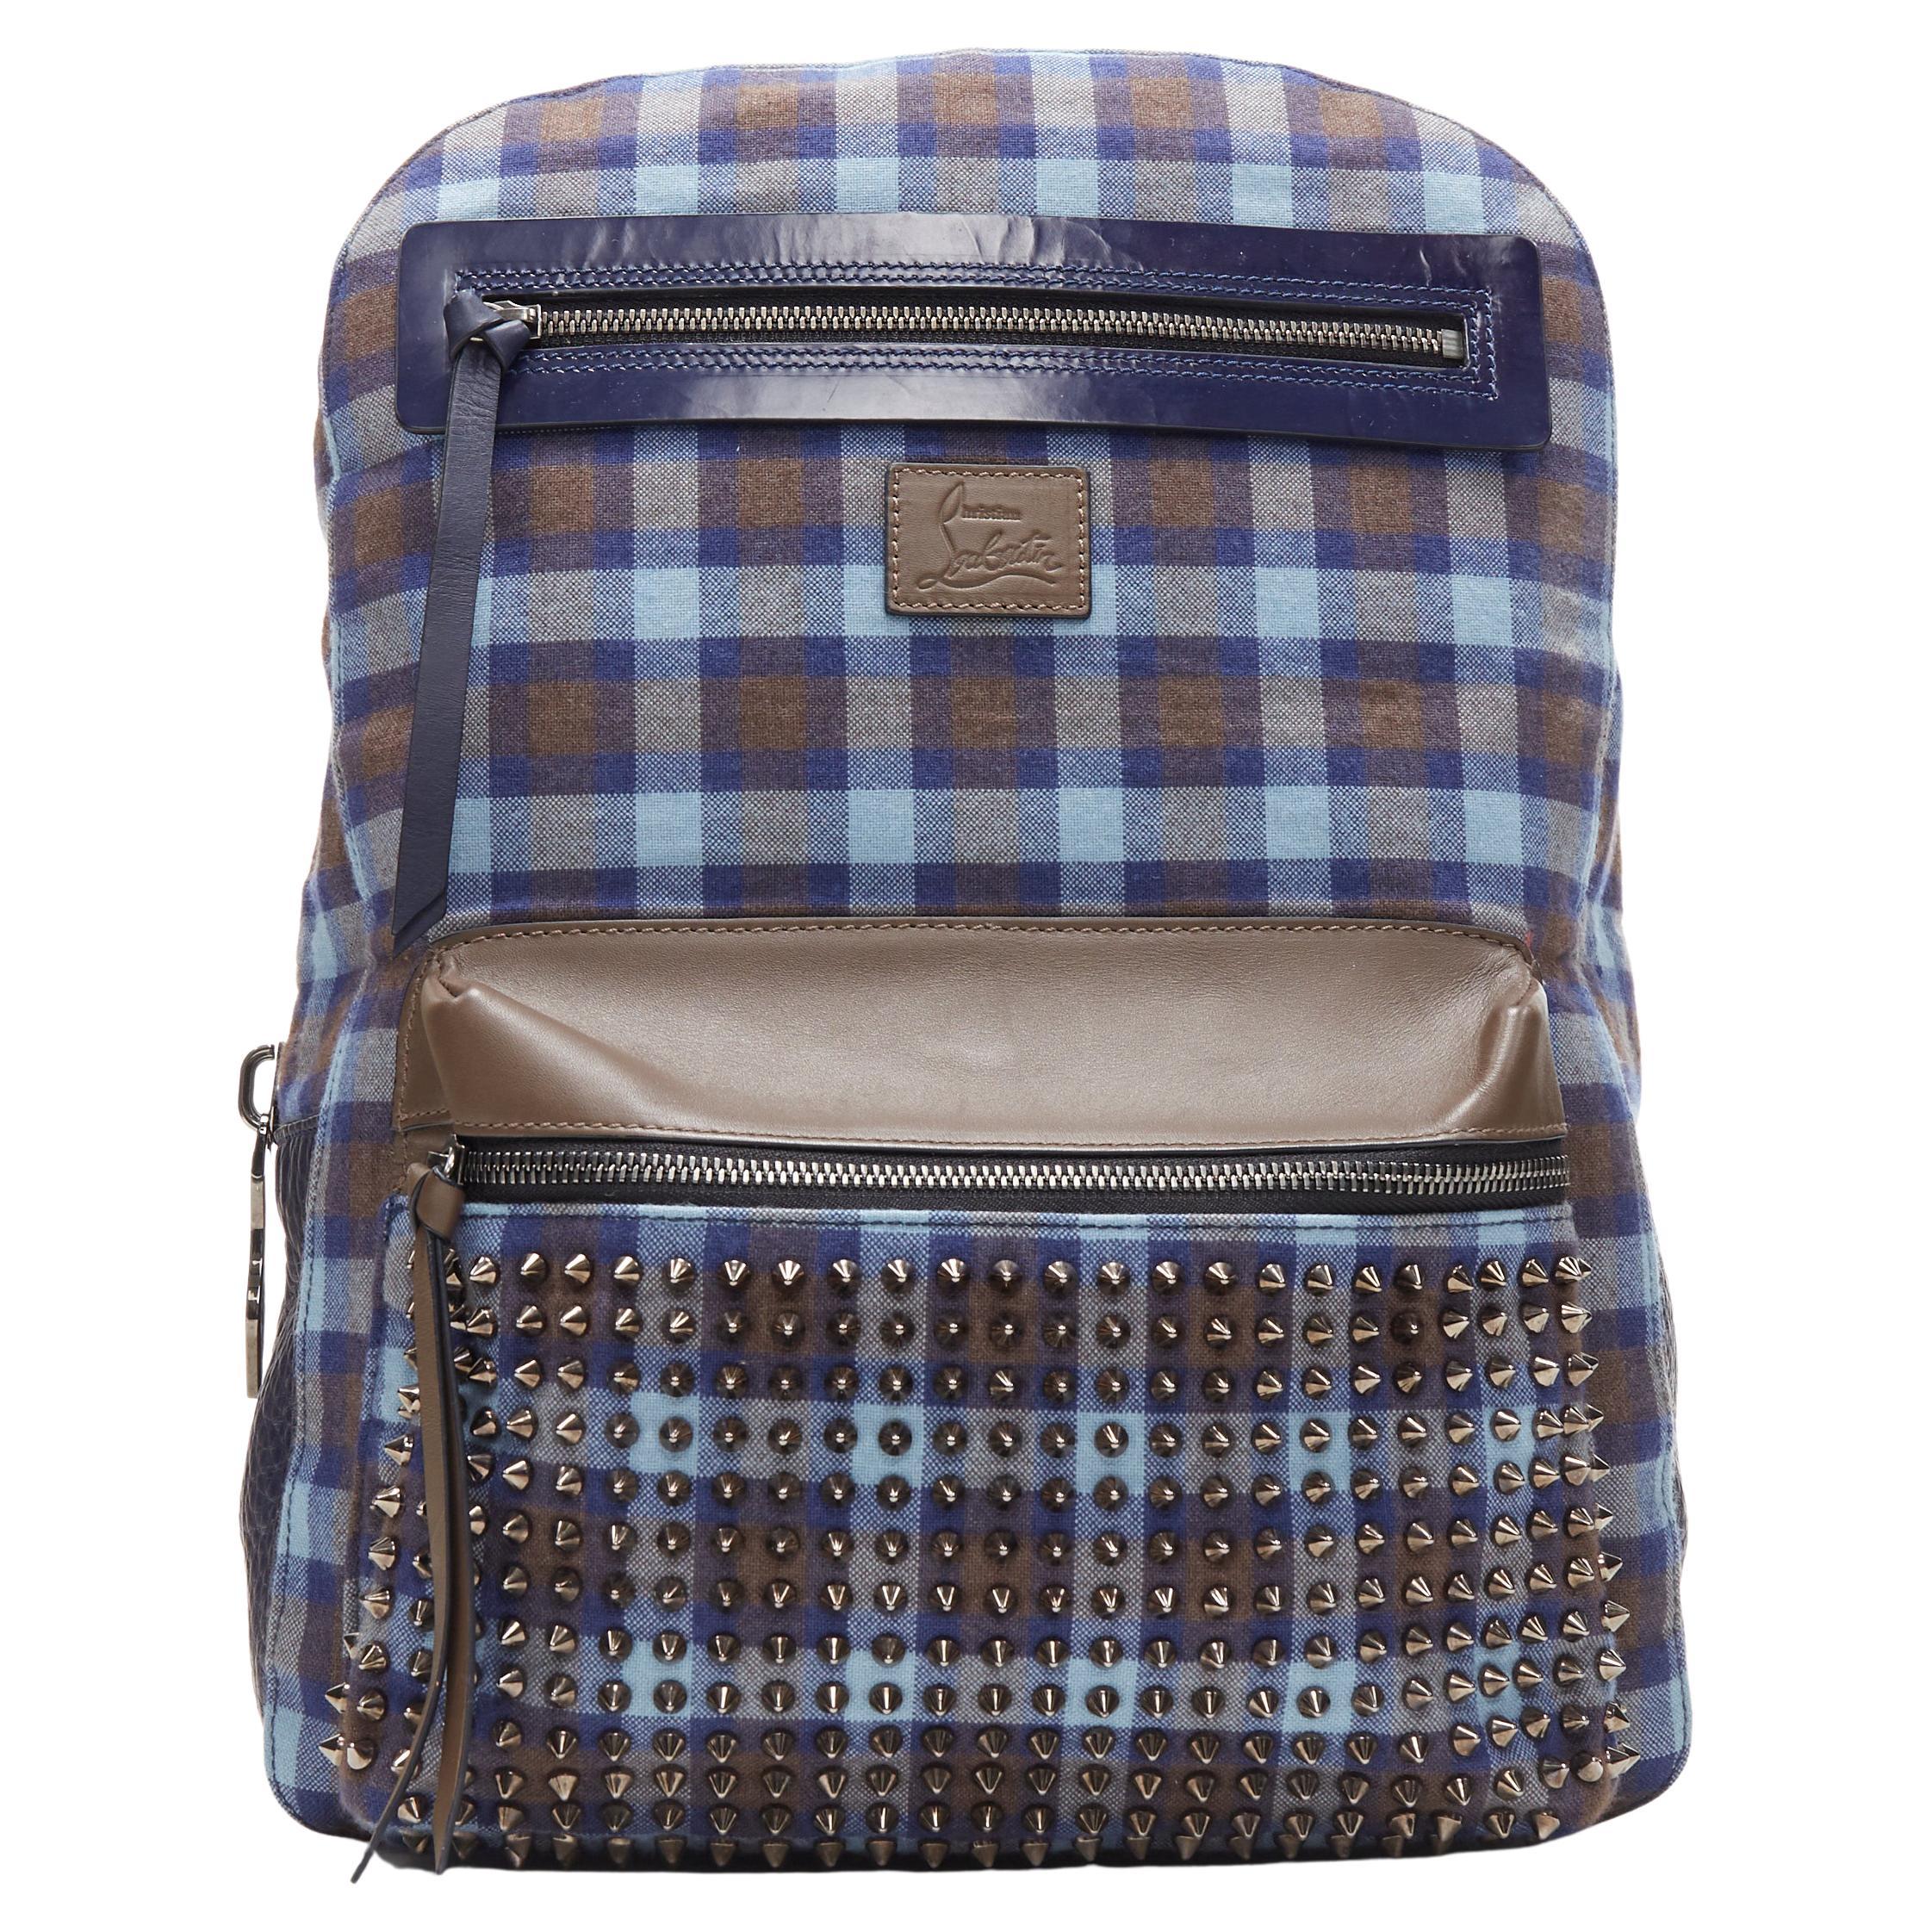 CHRISTIAN LOUBOUTIN Backloubi blue brown gingham check spike stud backpack bag For Sale